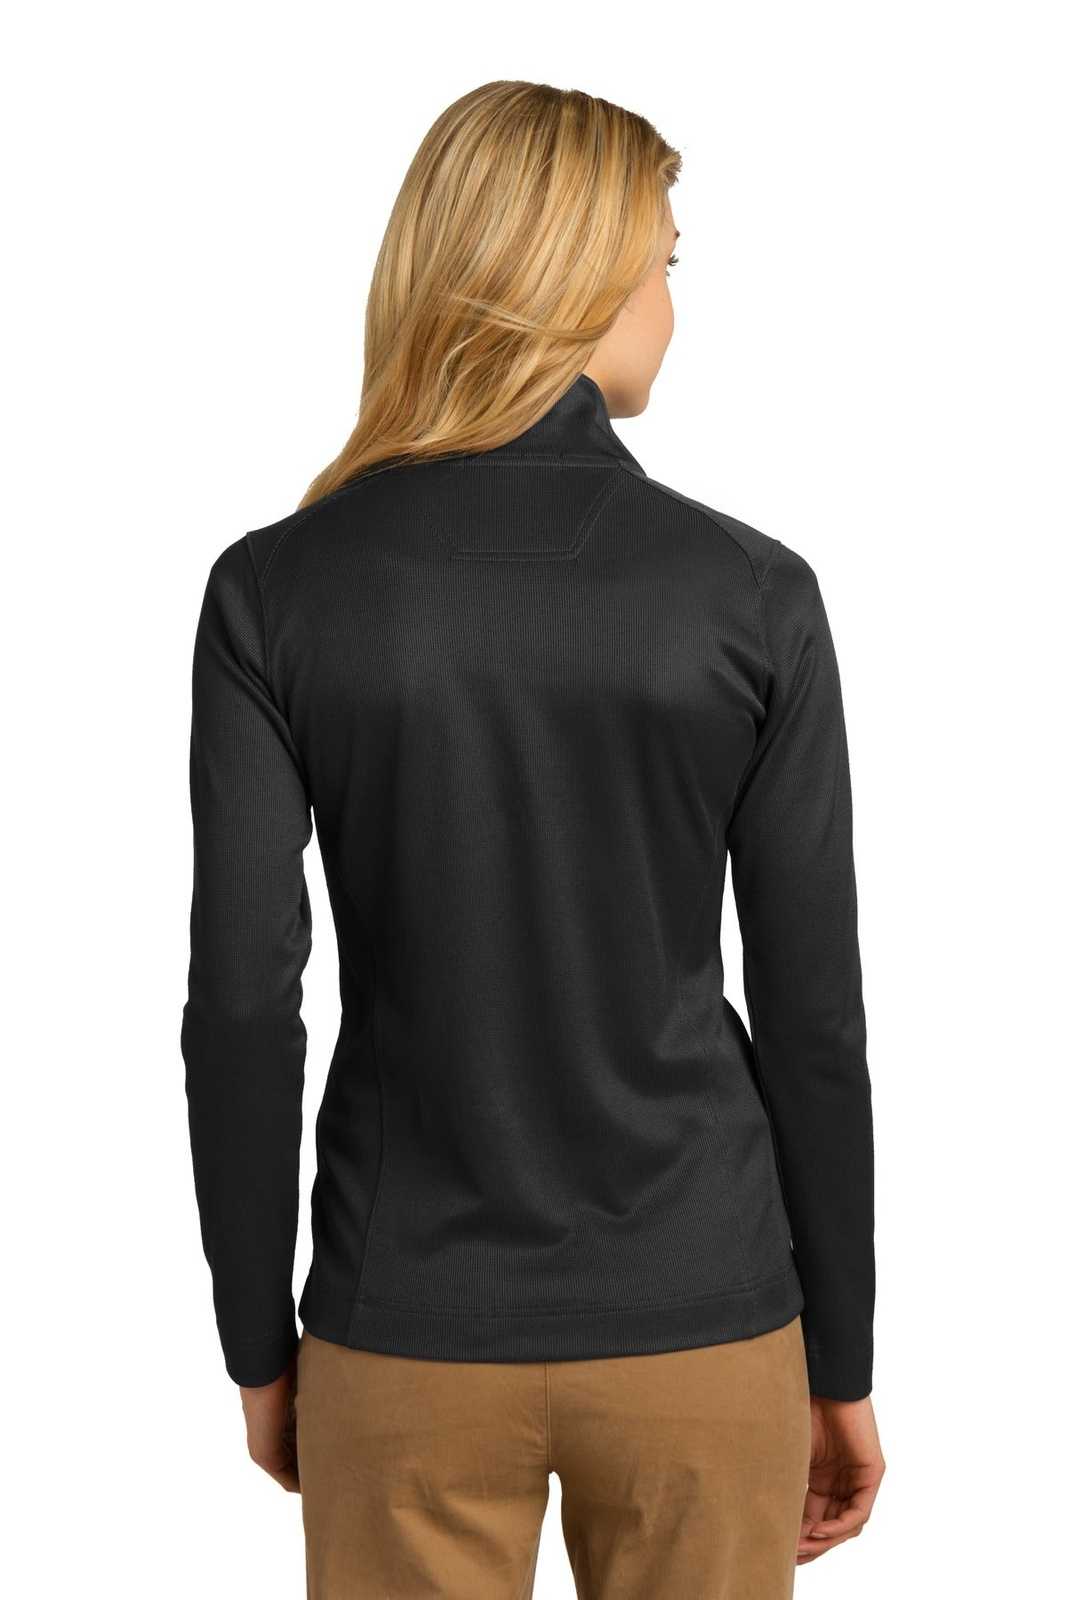 Port Authority L805 Ladies Vertical Texture Full-Zip Jacket - Black Iron Gray - HIT a Double - 1